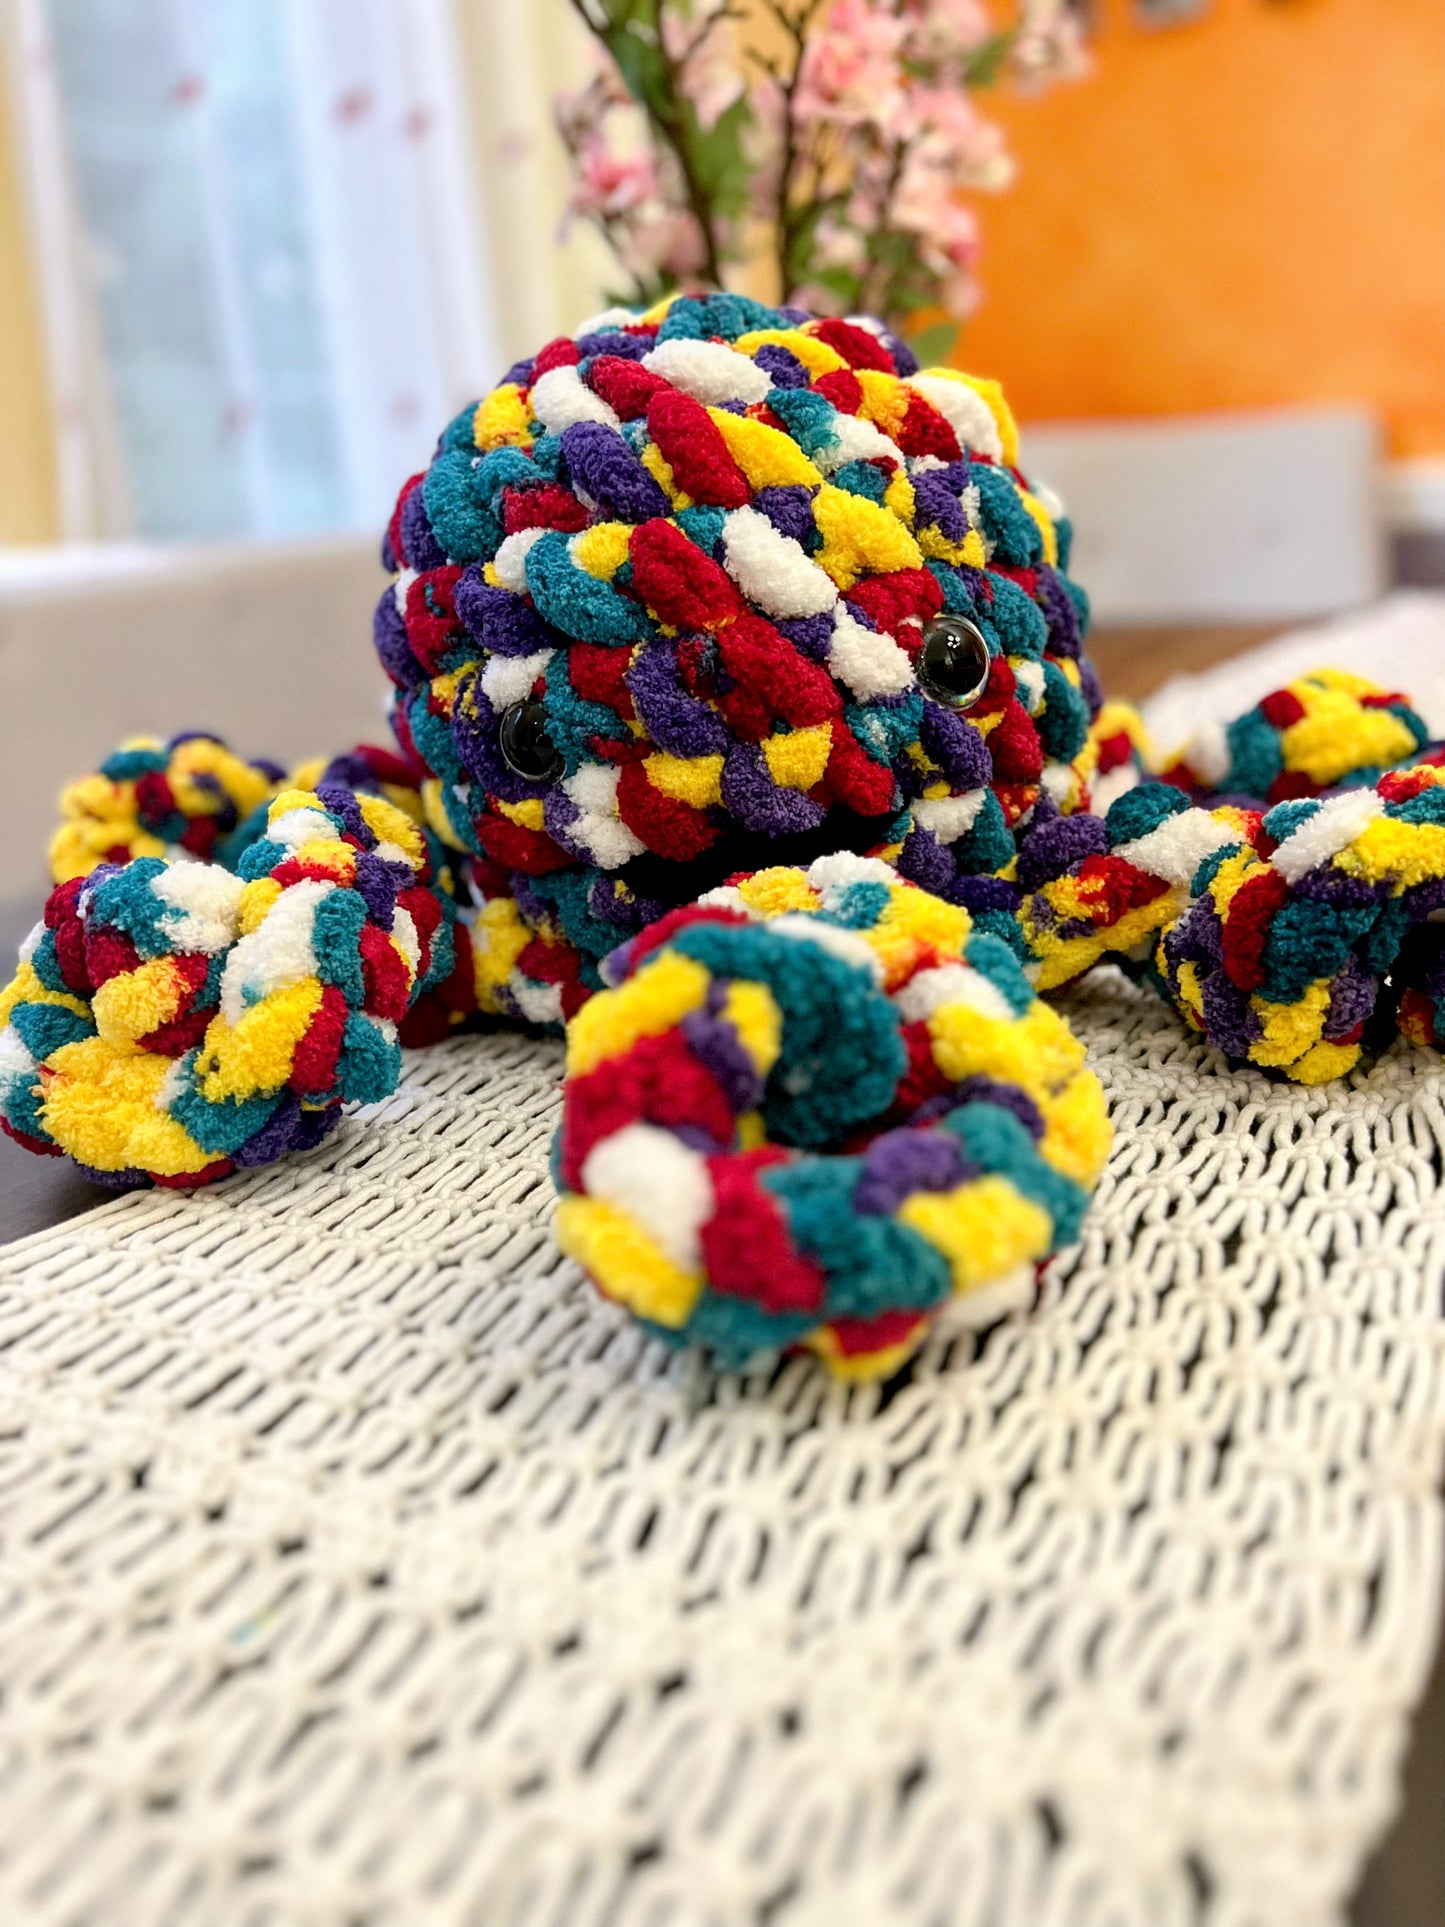 Stuffed Jumbo Colorful Octopus Jellyfish - Crochet Knitted Amigurumi Toy